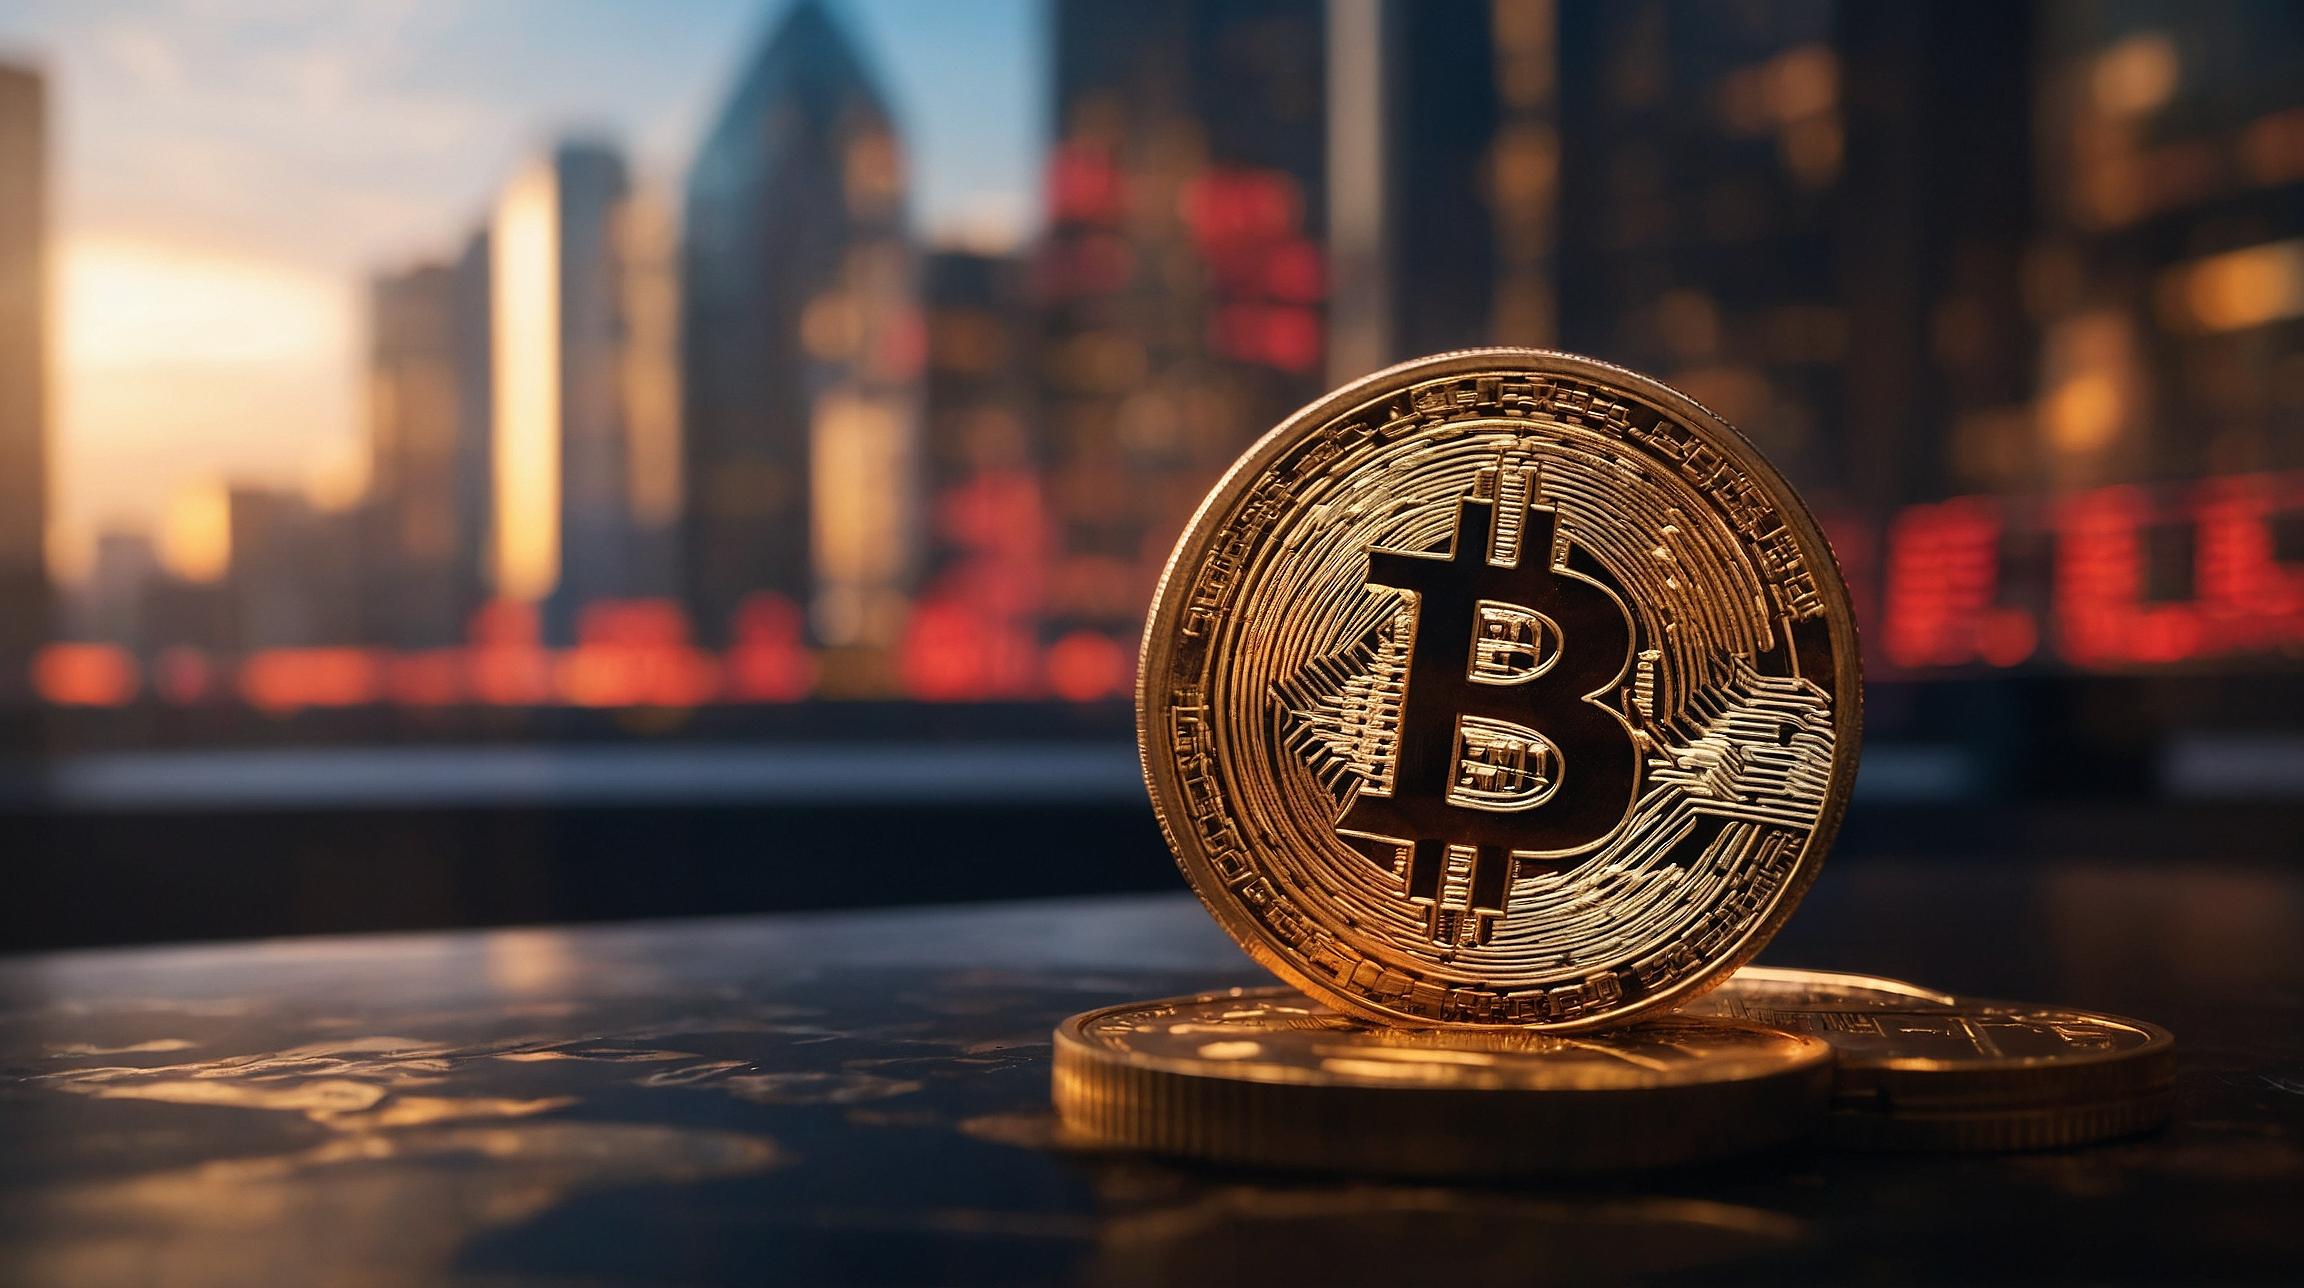 Bitcoin Nears K Amid Mt. Gox Payout Concerns | FinOracle